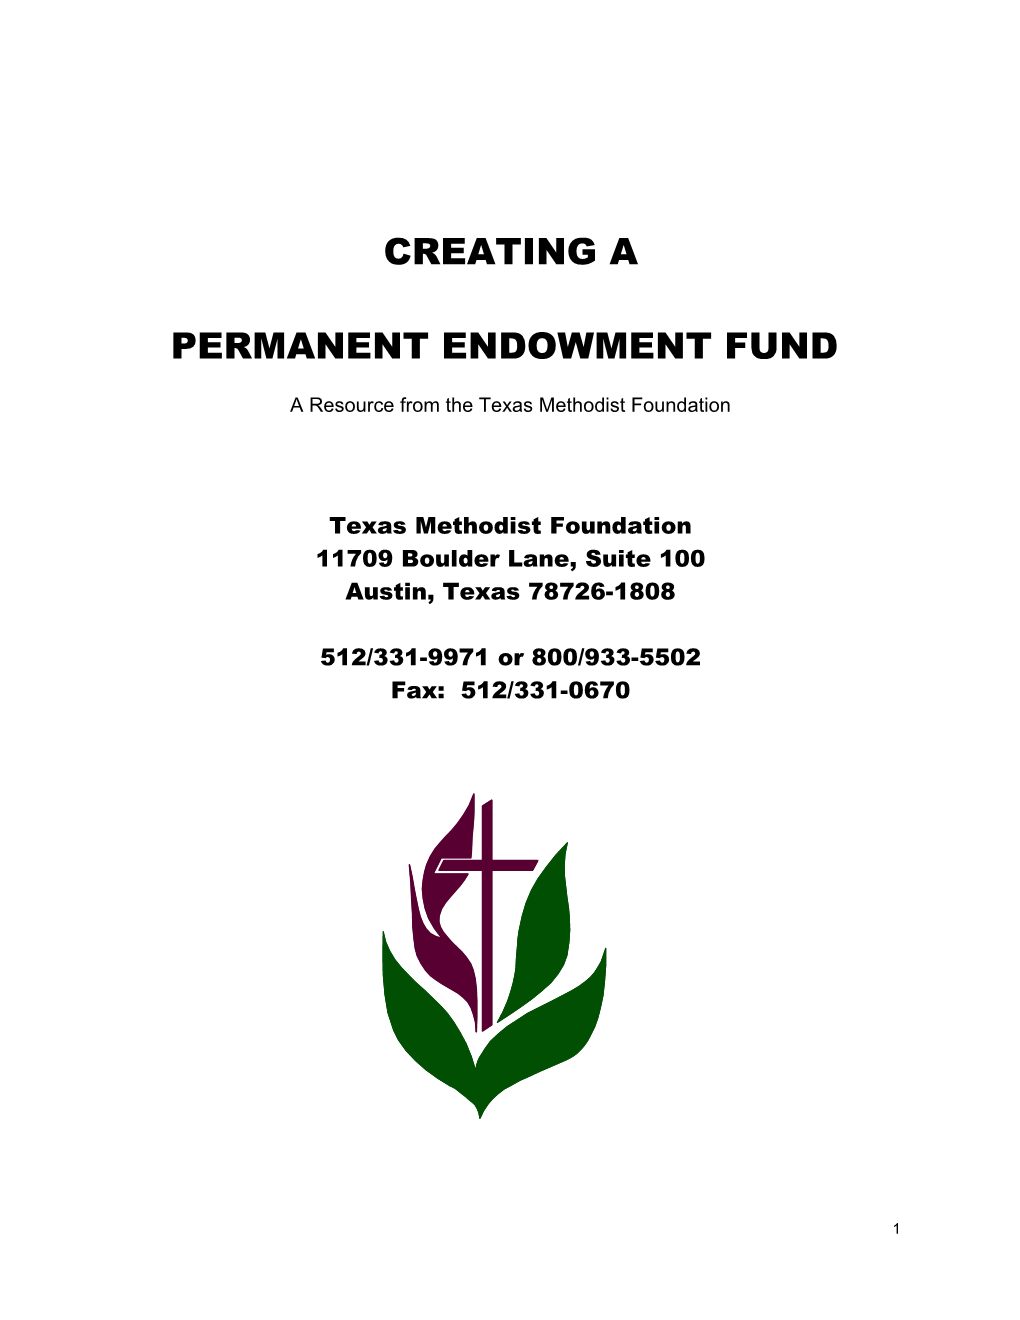 Permanent Endowment Fund